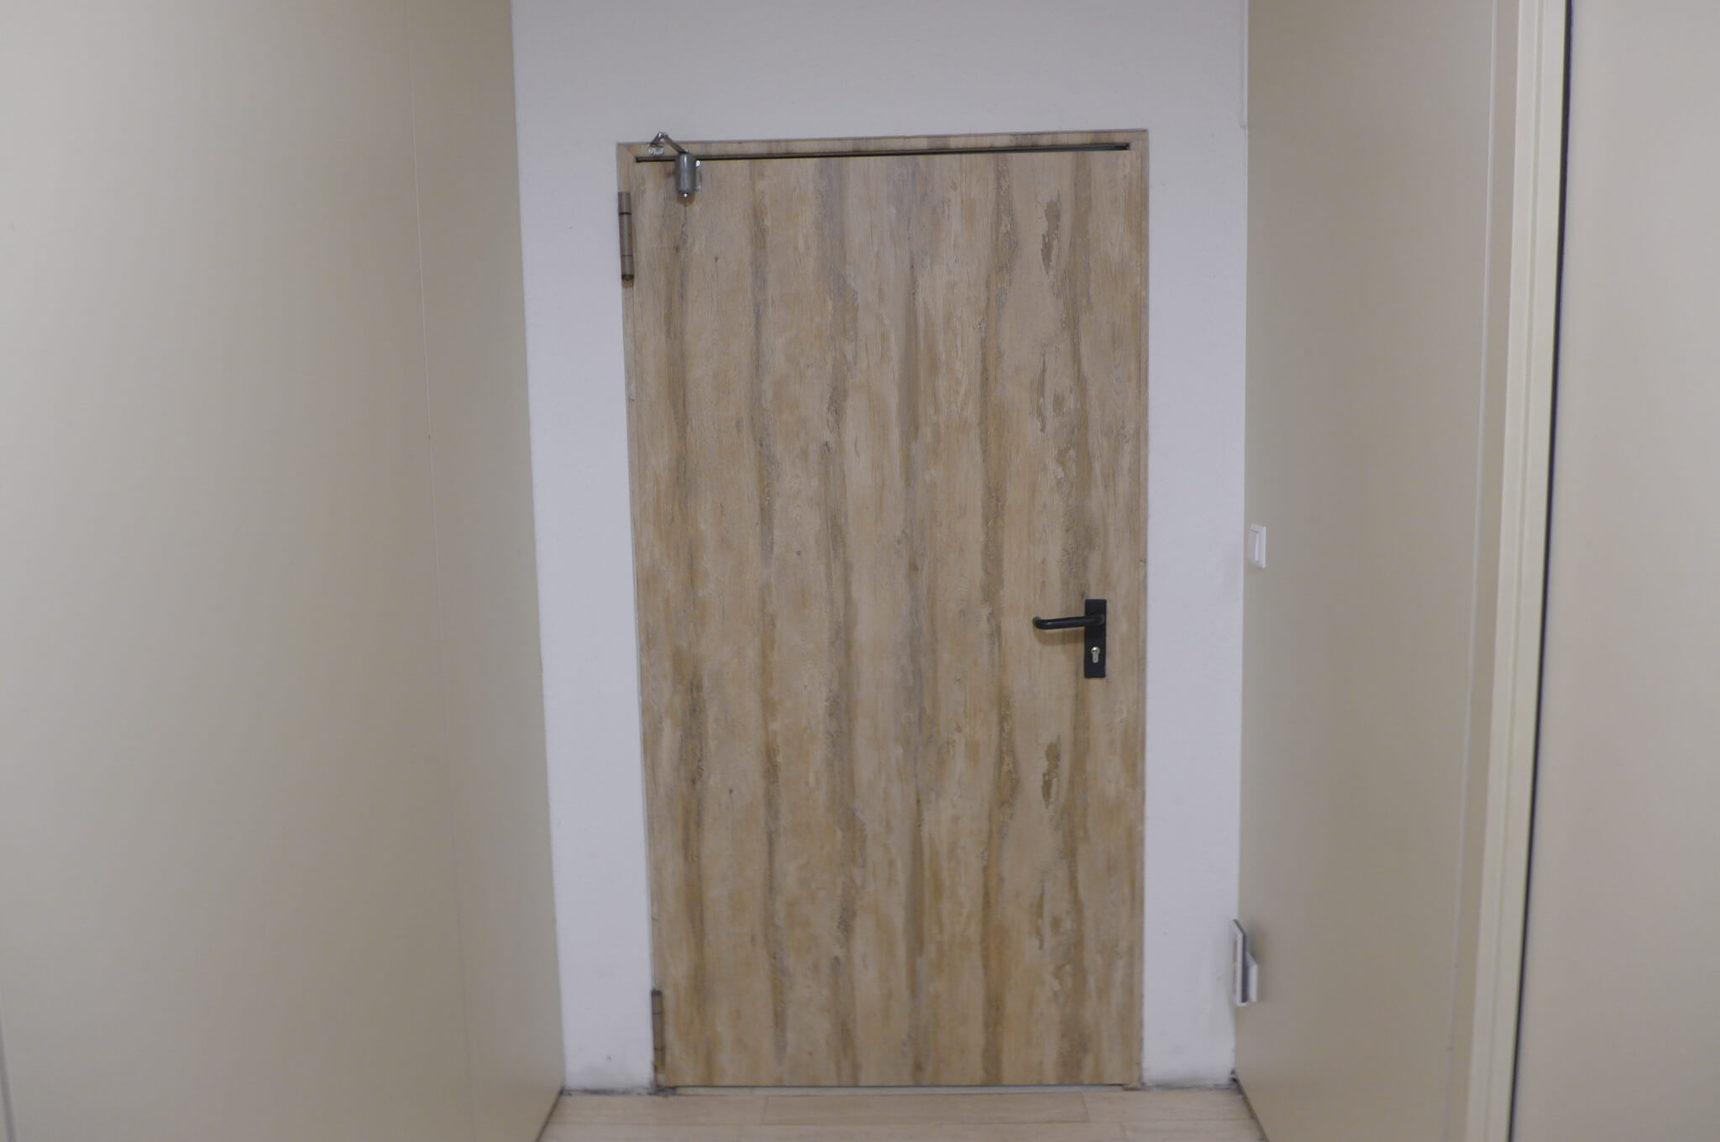 puerta metálica comercios lámina de madera DW803 Smooth Wide Wood ejemplo después